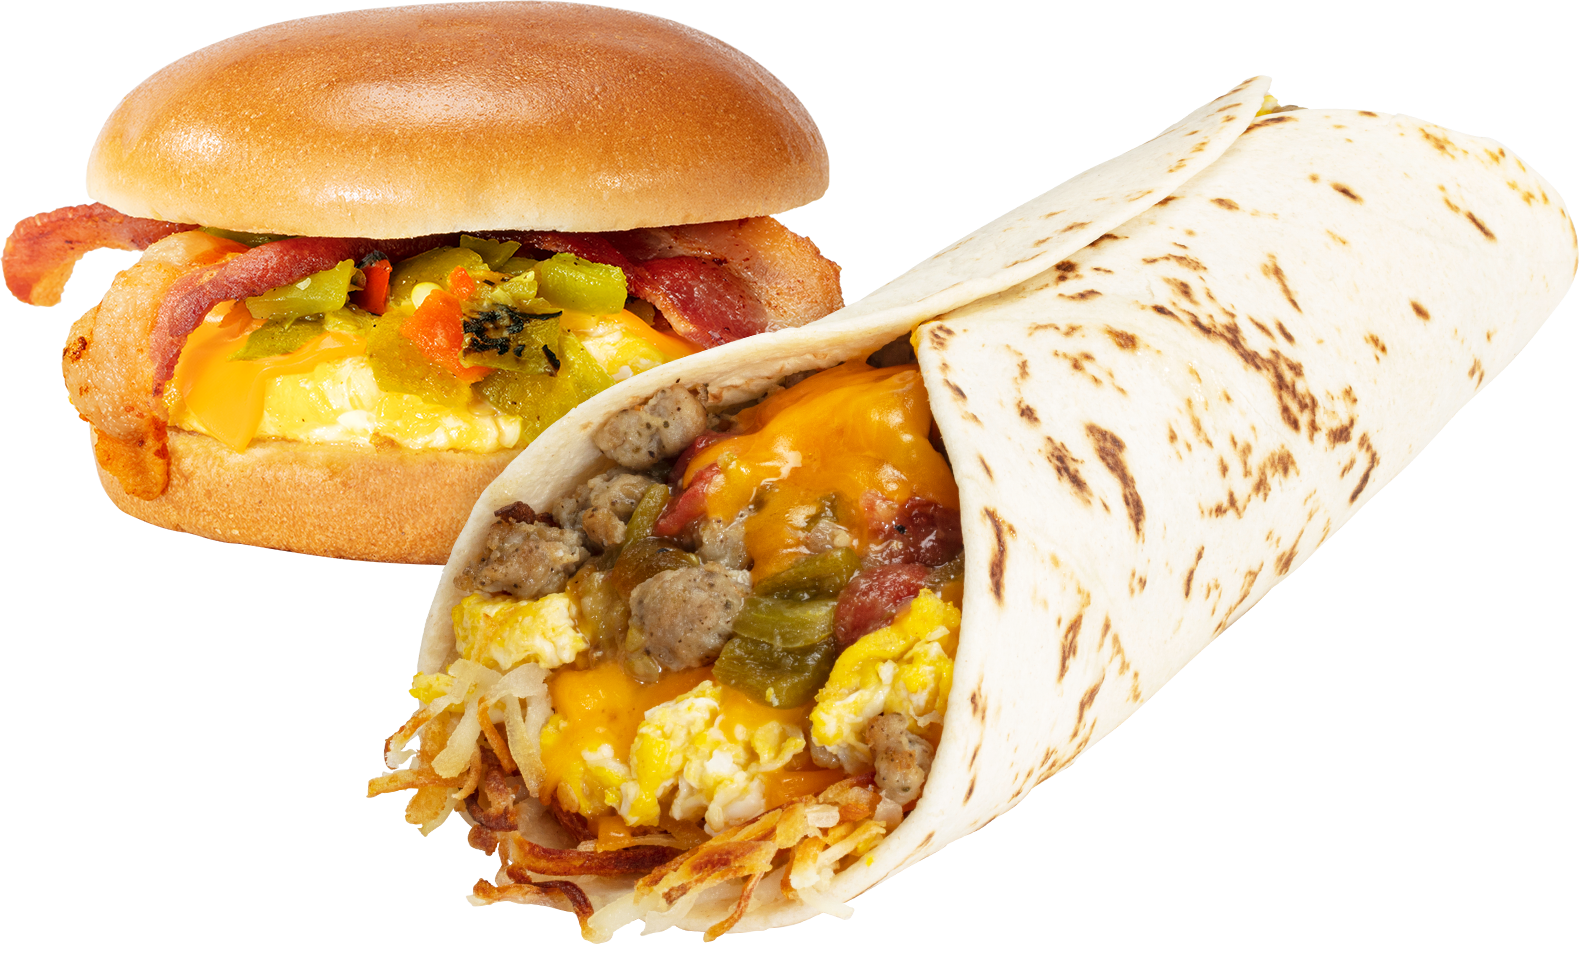 Blake's Breakfast Burrito and Breakfast Bagel Sandwich